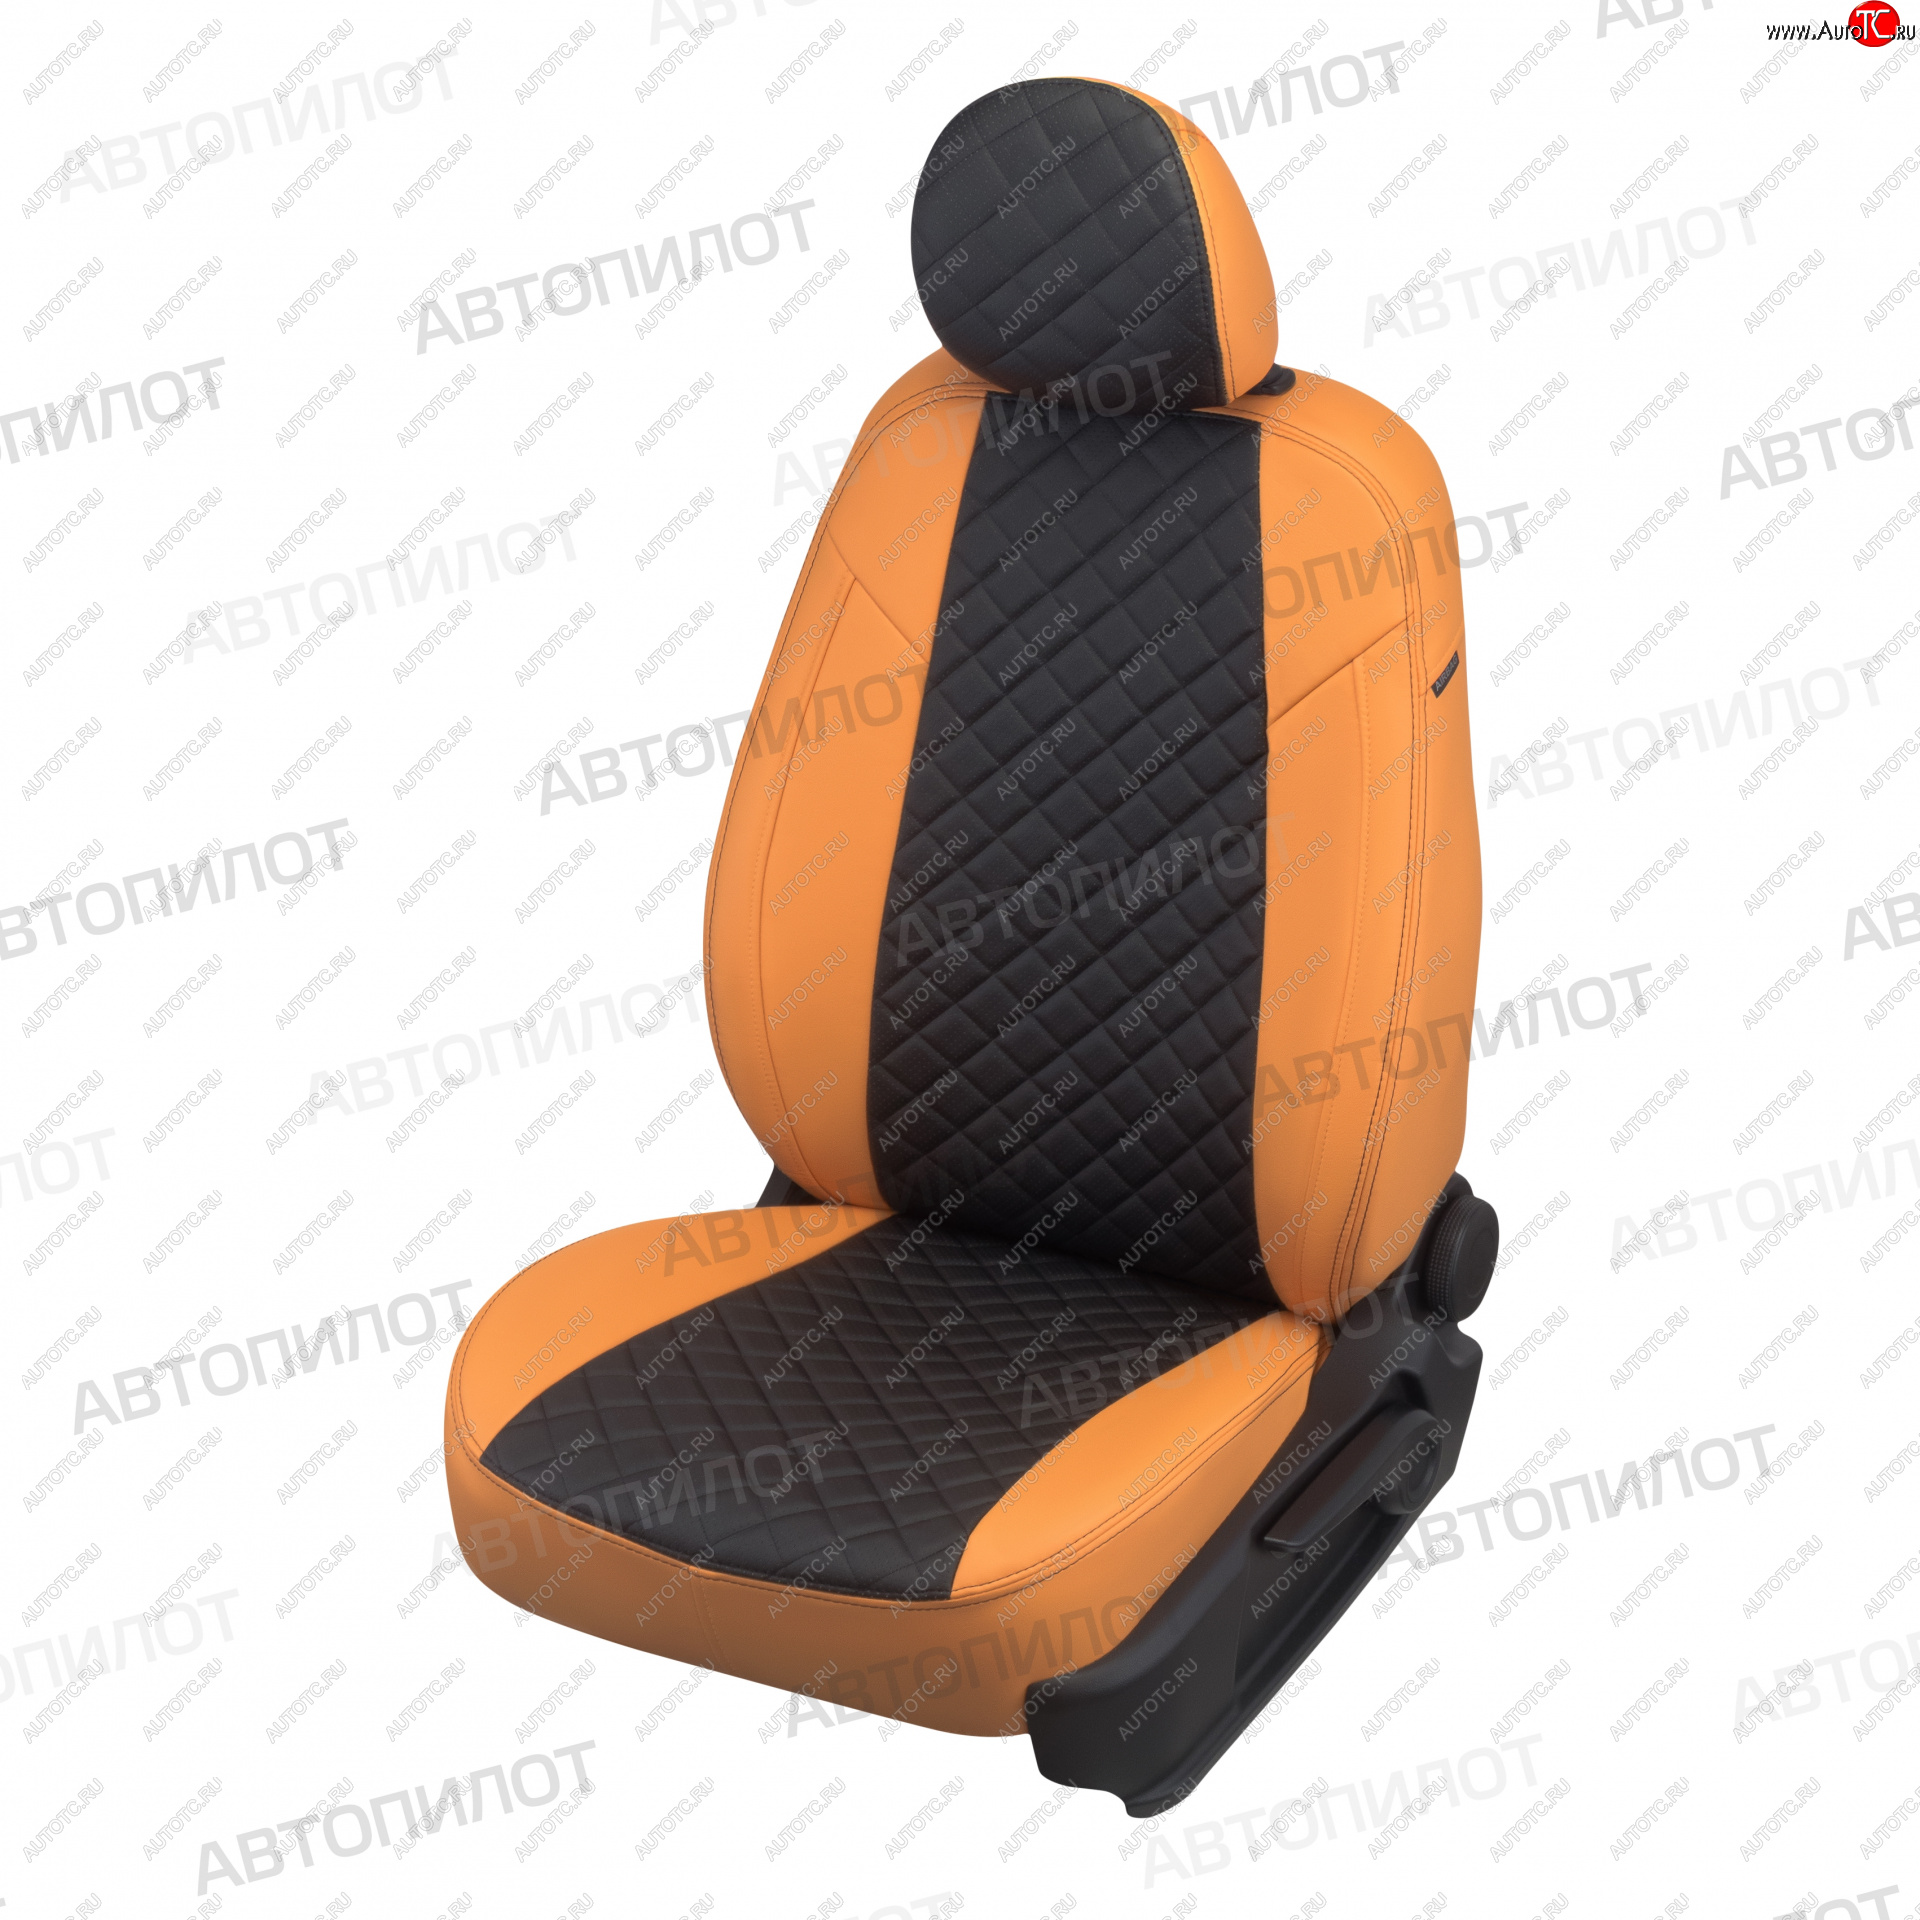 14 499 р. Чехлы сидений (5 мест, экокожа) Автопилот Ромб  Ford Galaxy  WGR (1995-2006) (оранж/черный)